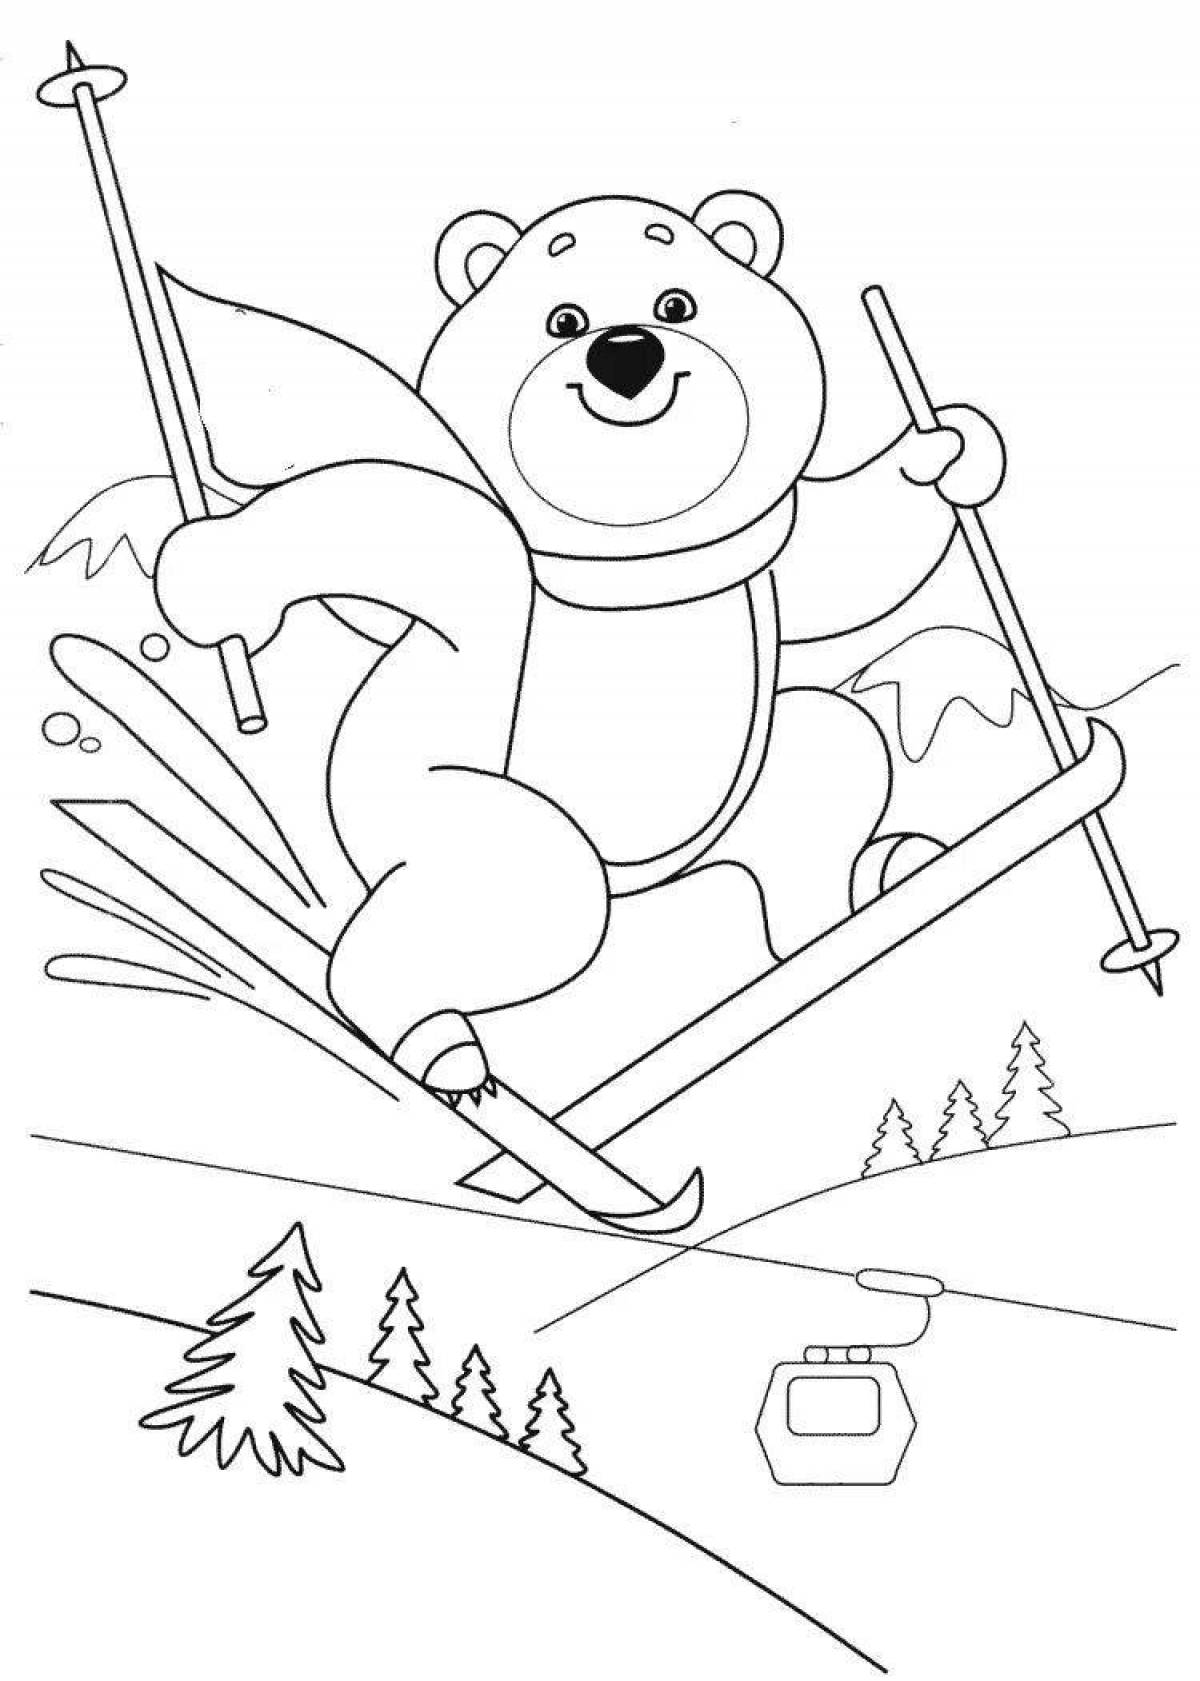 Fantastic winter olympiad coloring book